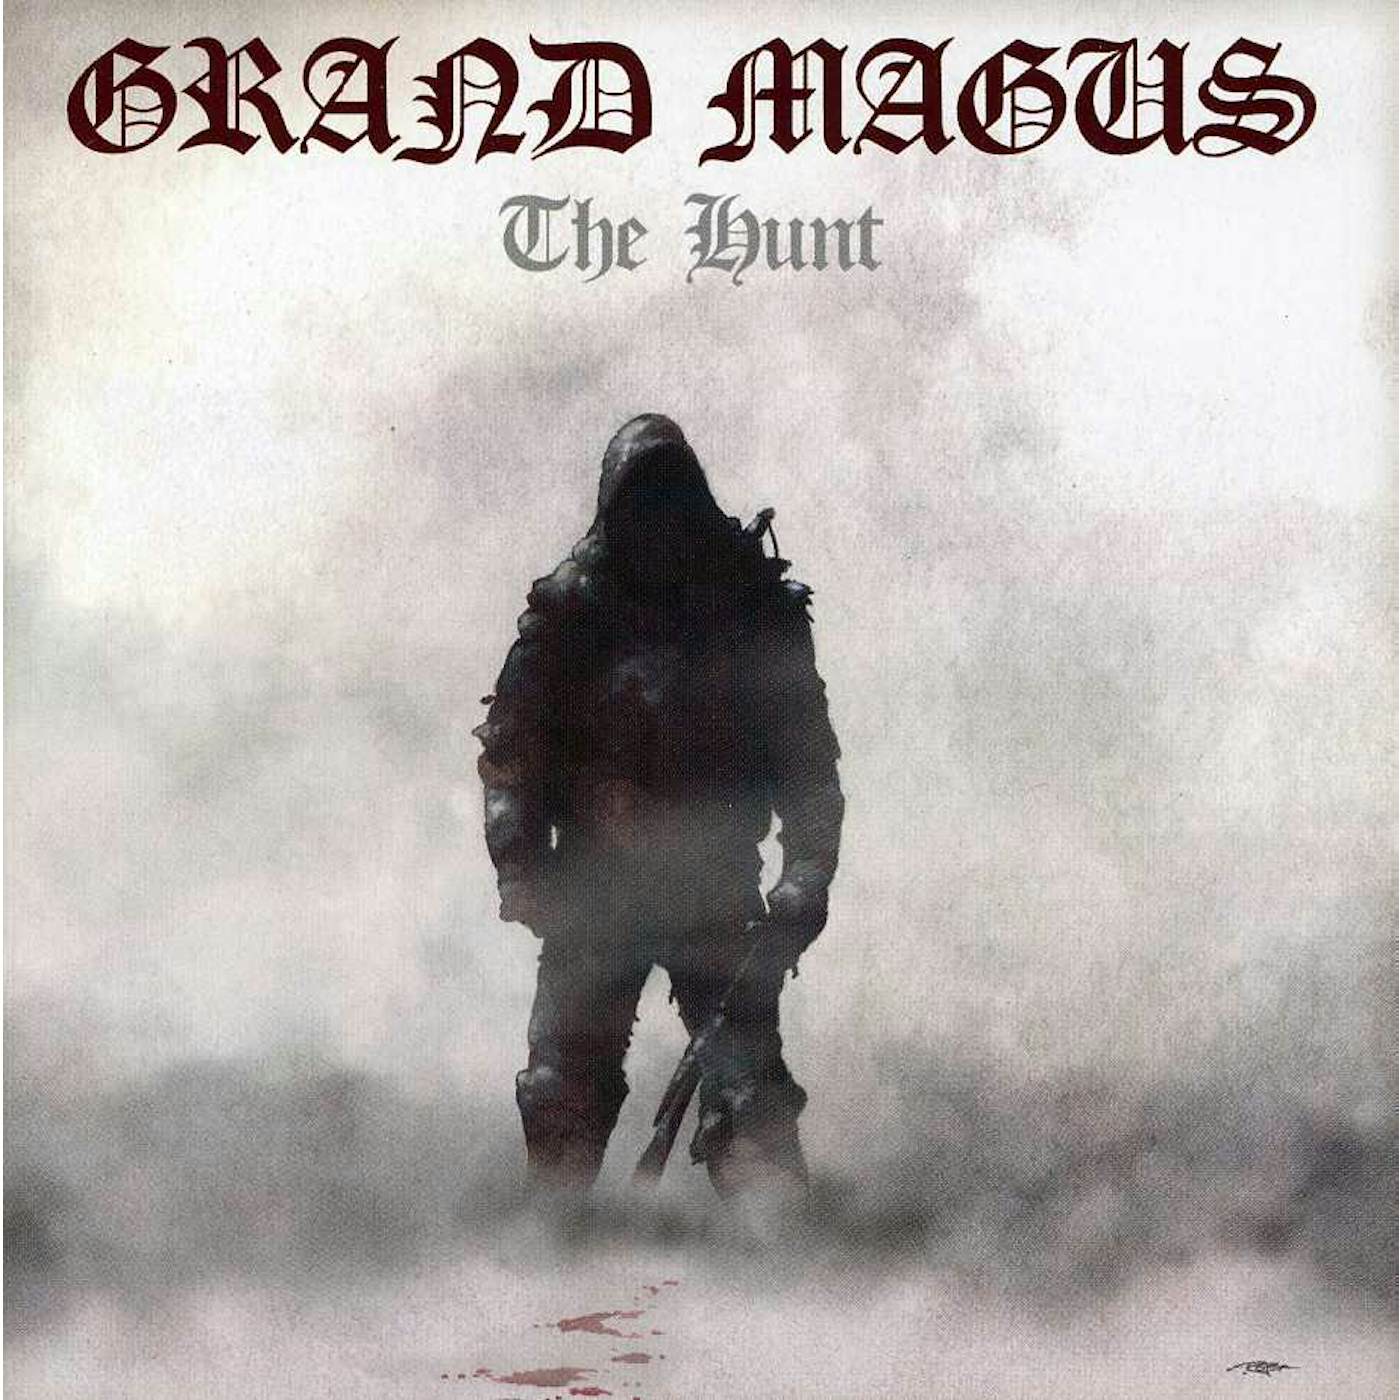 Grand Magus HUNT CD